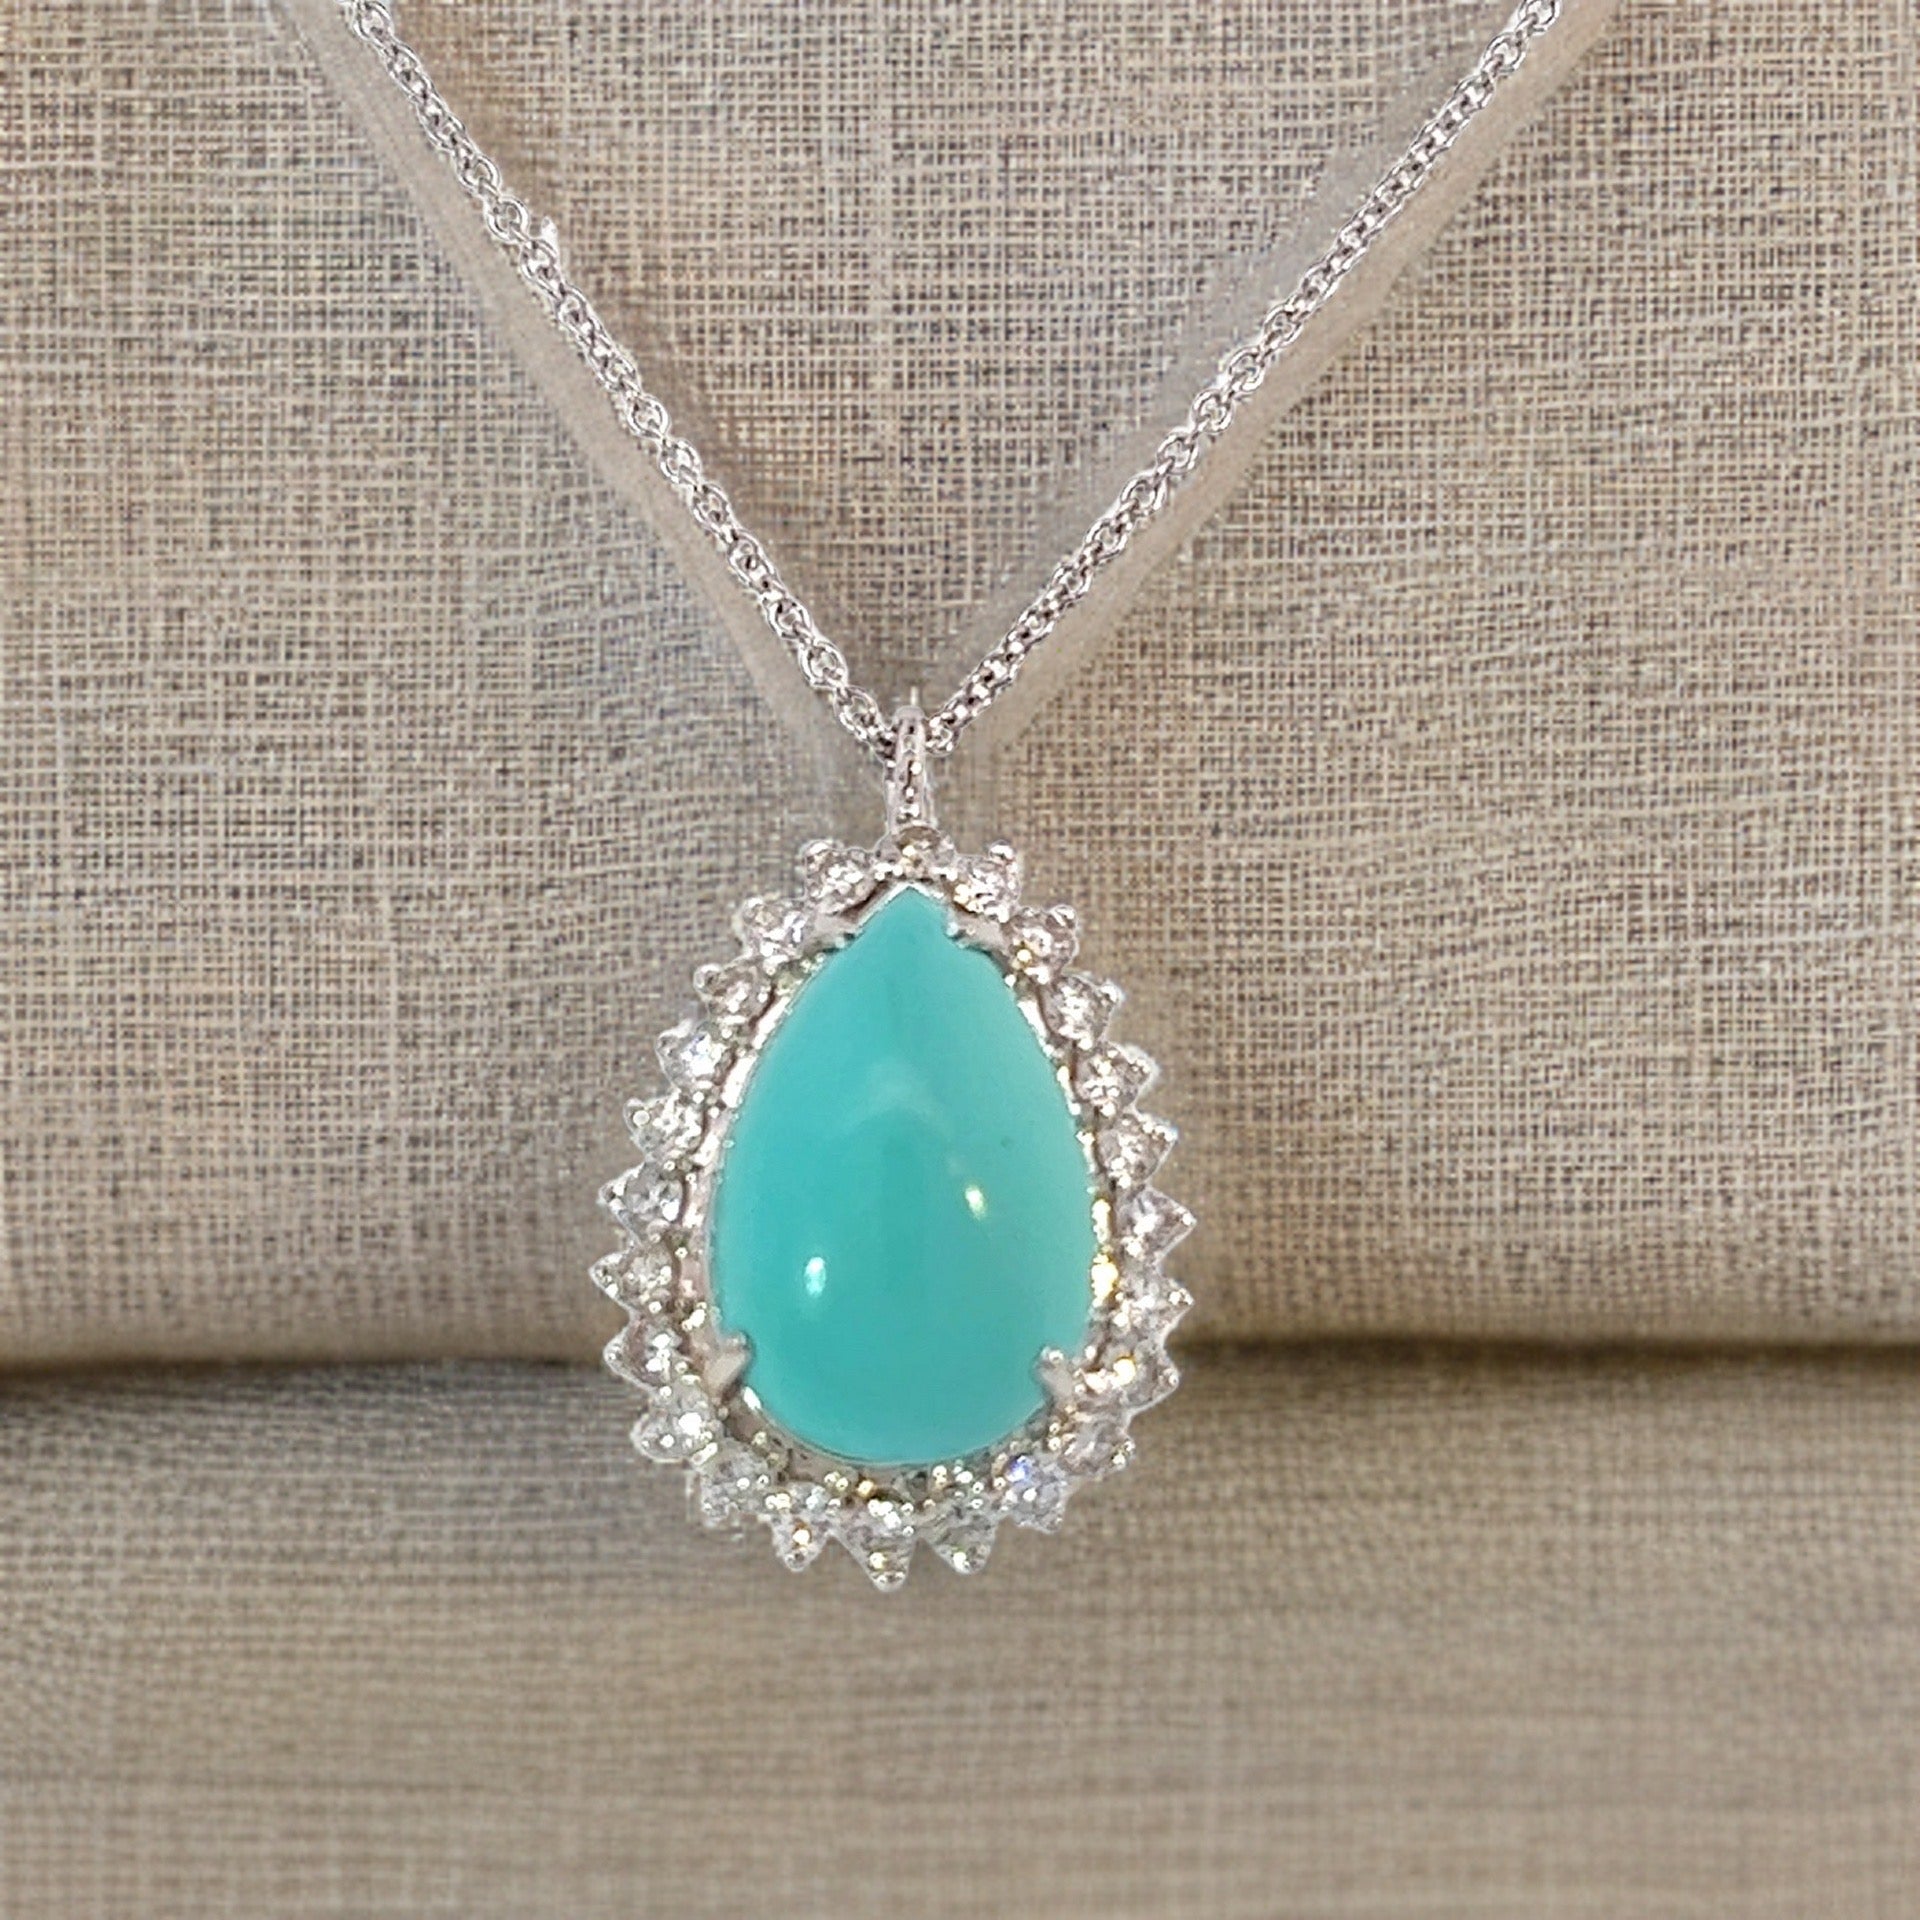 Persian Turquoise Diamond Pendant With Chain 17" 14k WG 9.9 TCW Certified $5,950 307918 - Certified Fine Jewelry